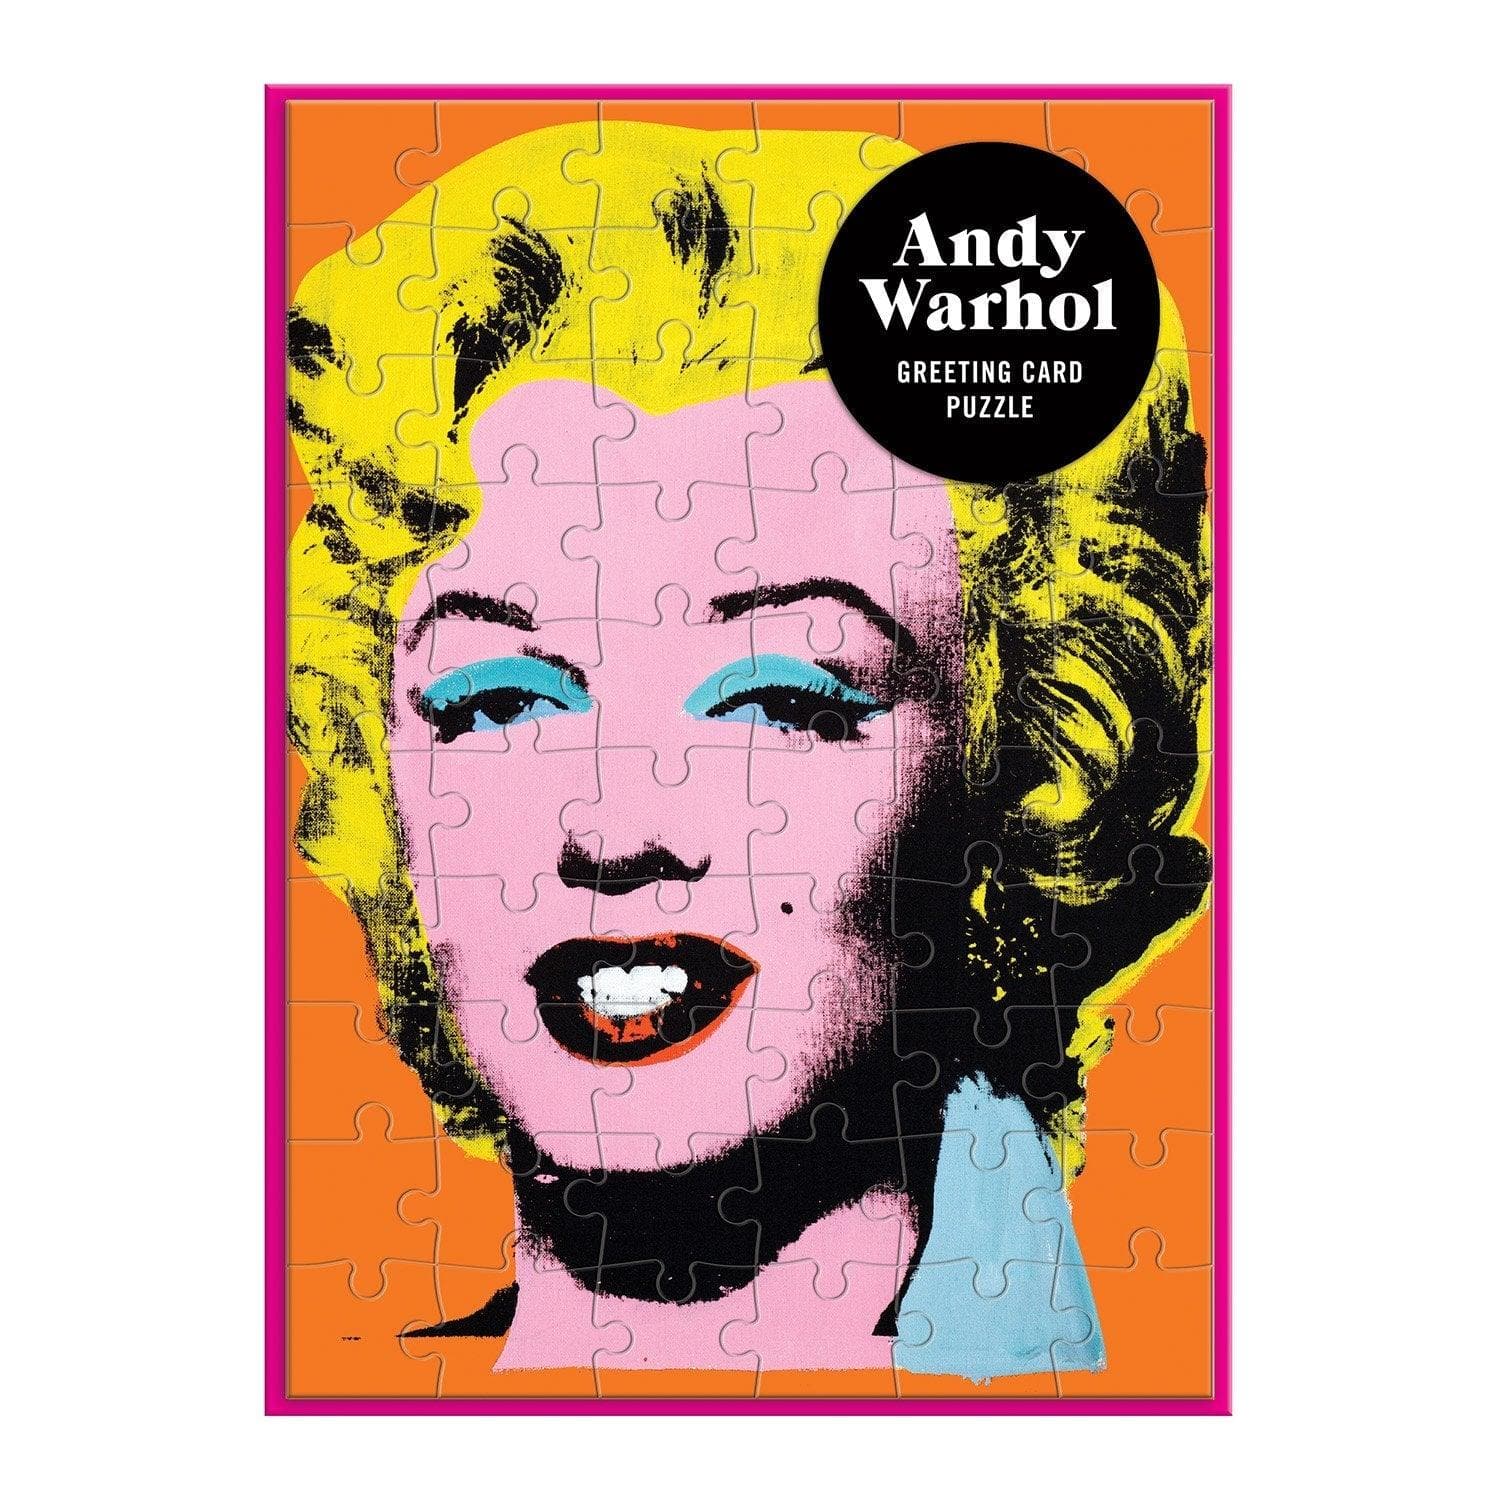 Andy Warhol Philosophy Greeting Assortment Notecard Set Andy Warhol Marilyn Greeting Card Puzzle 